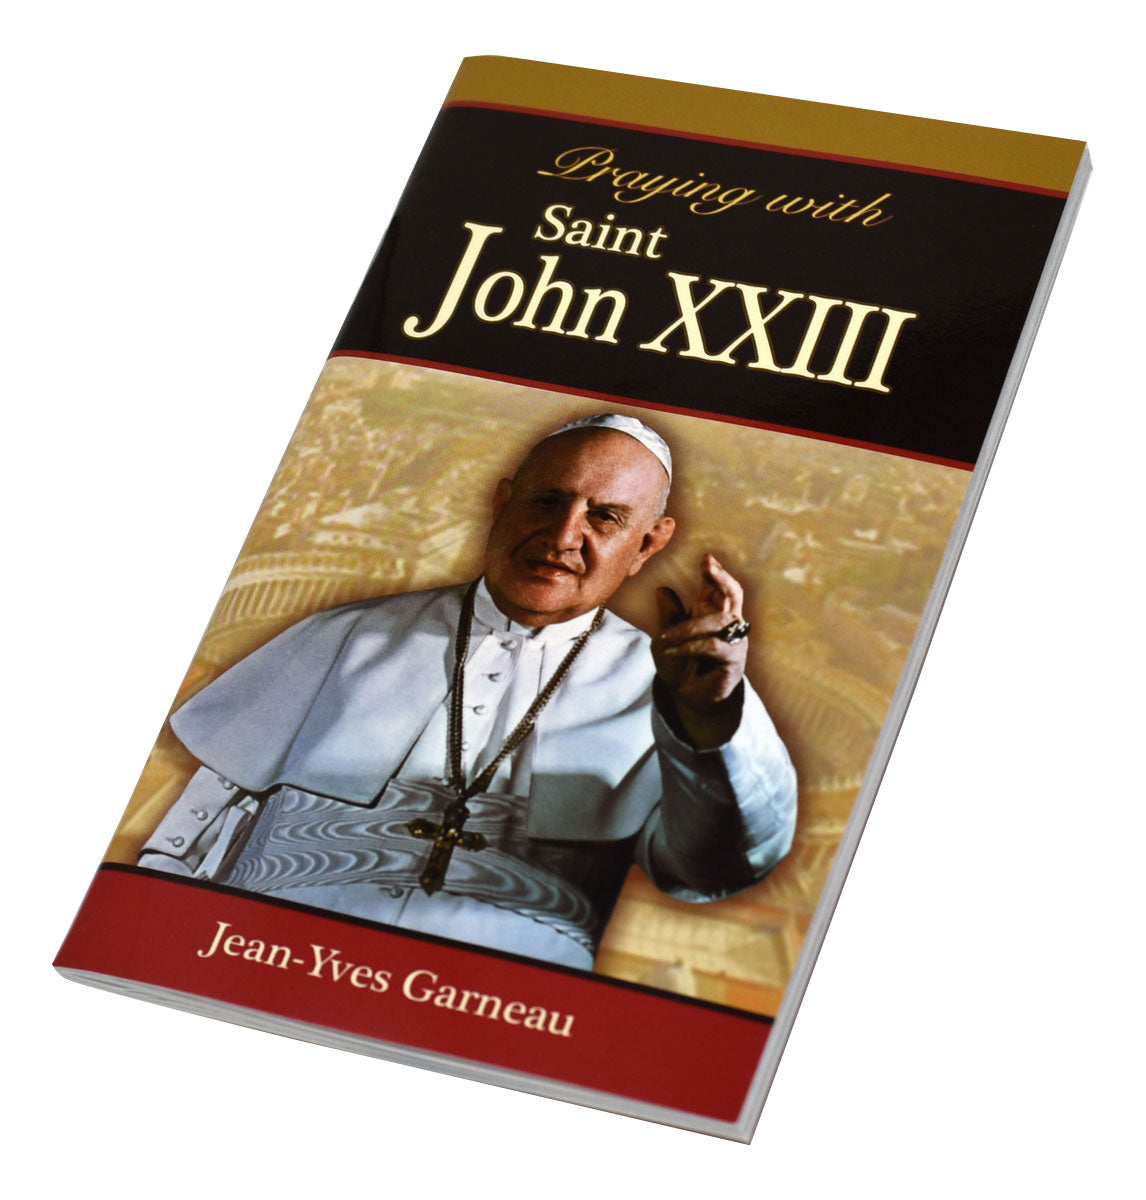 Praying With Saint John XXIII